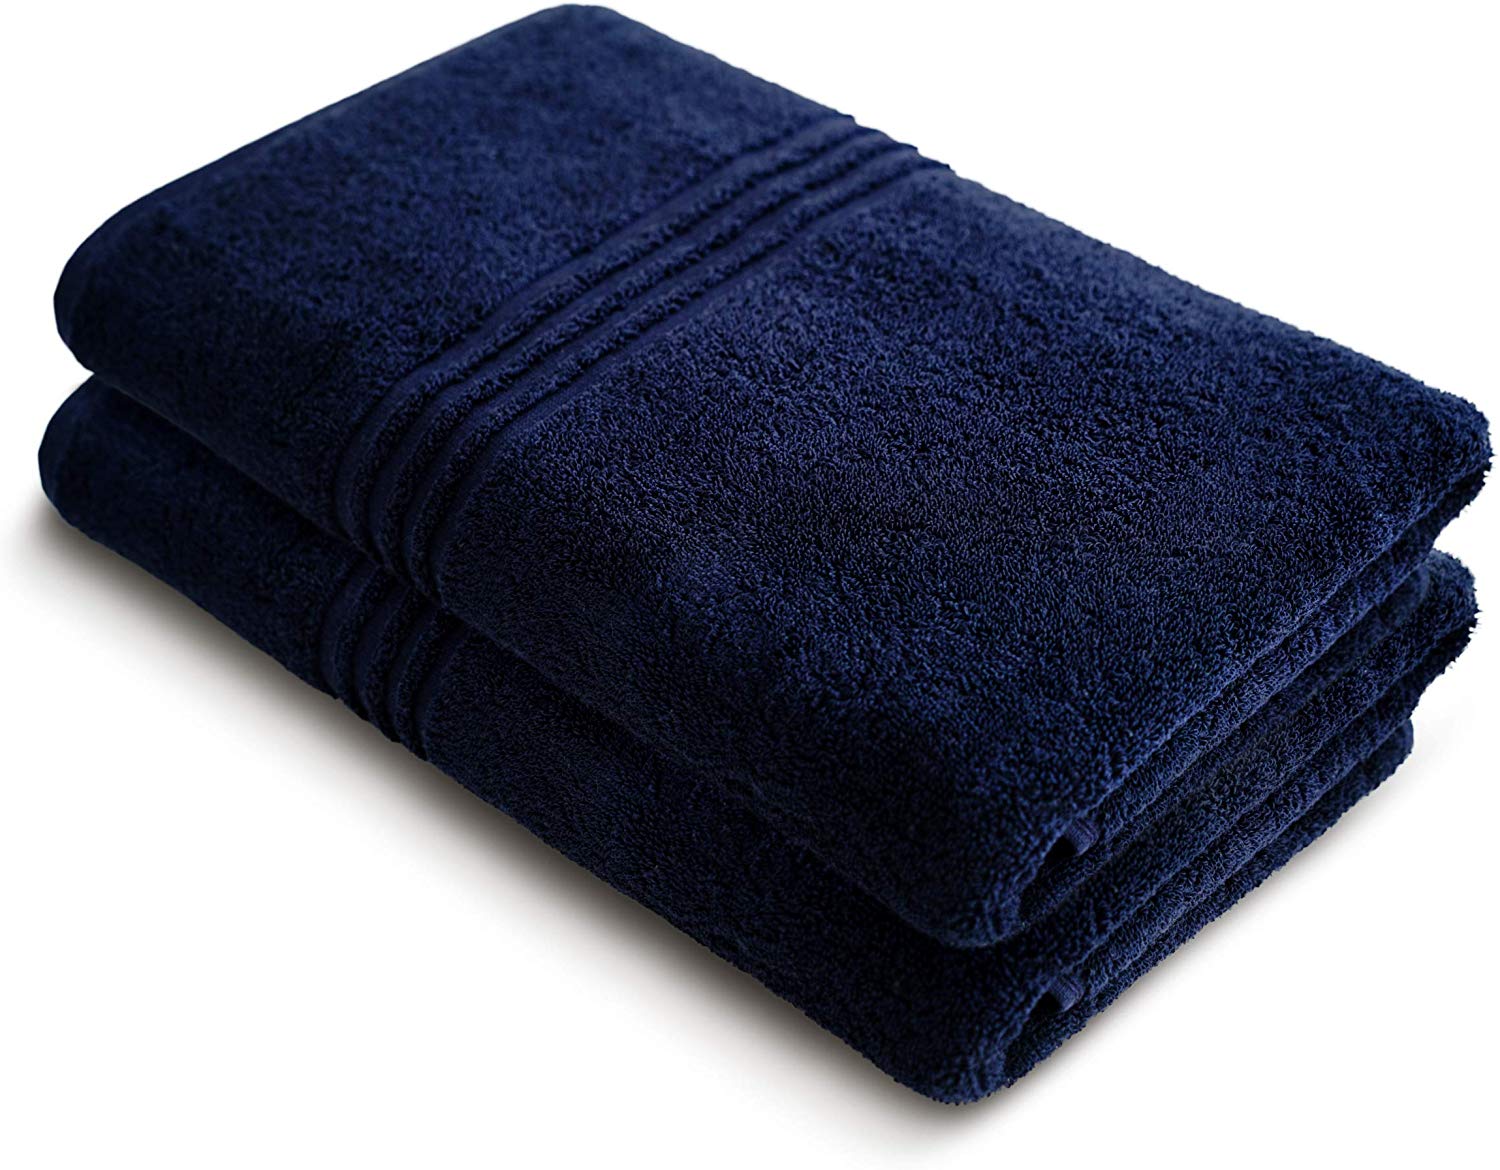 Exclusive 5 Star Hotel Turkish Cotton Navy Towel Set - (2 Bath Towels)